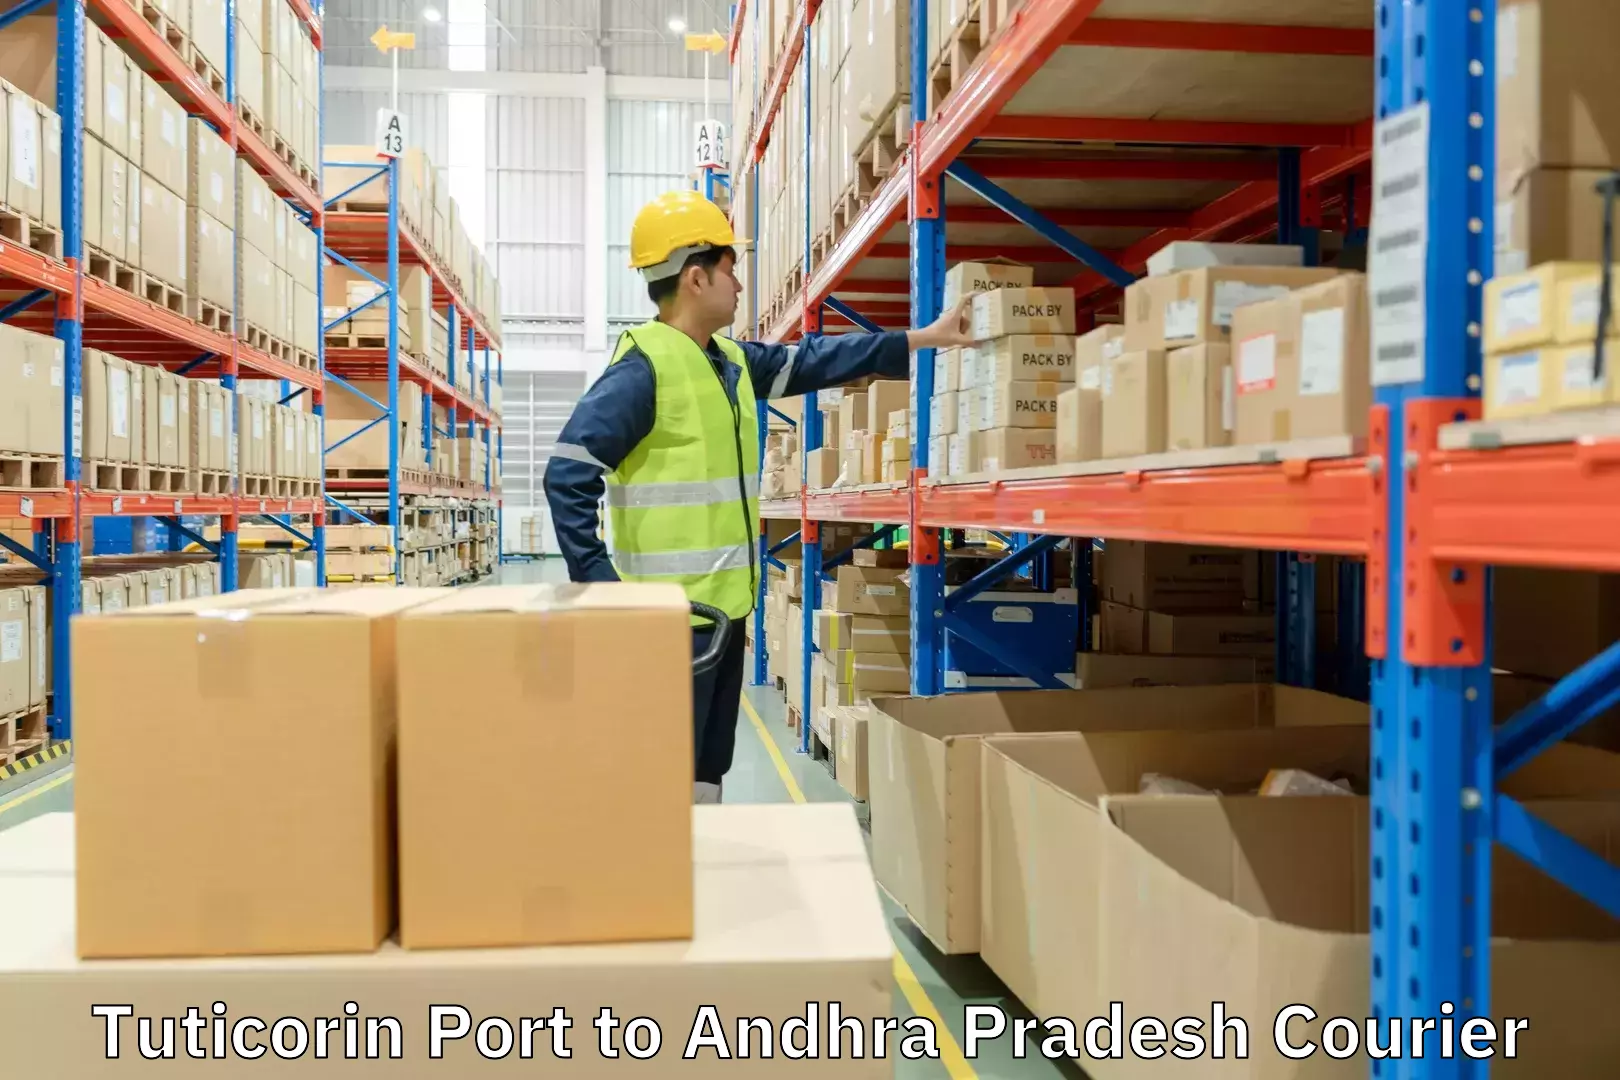 Speedy delivery service Tuticorin Port to Andhra Pradesh